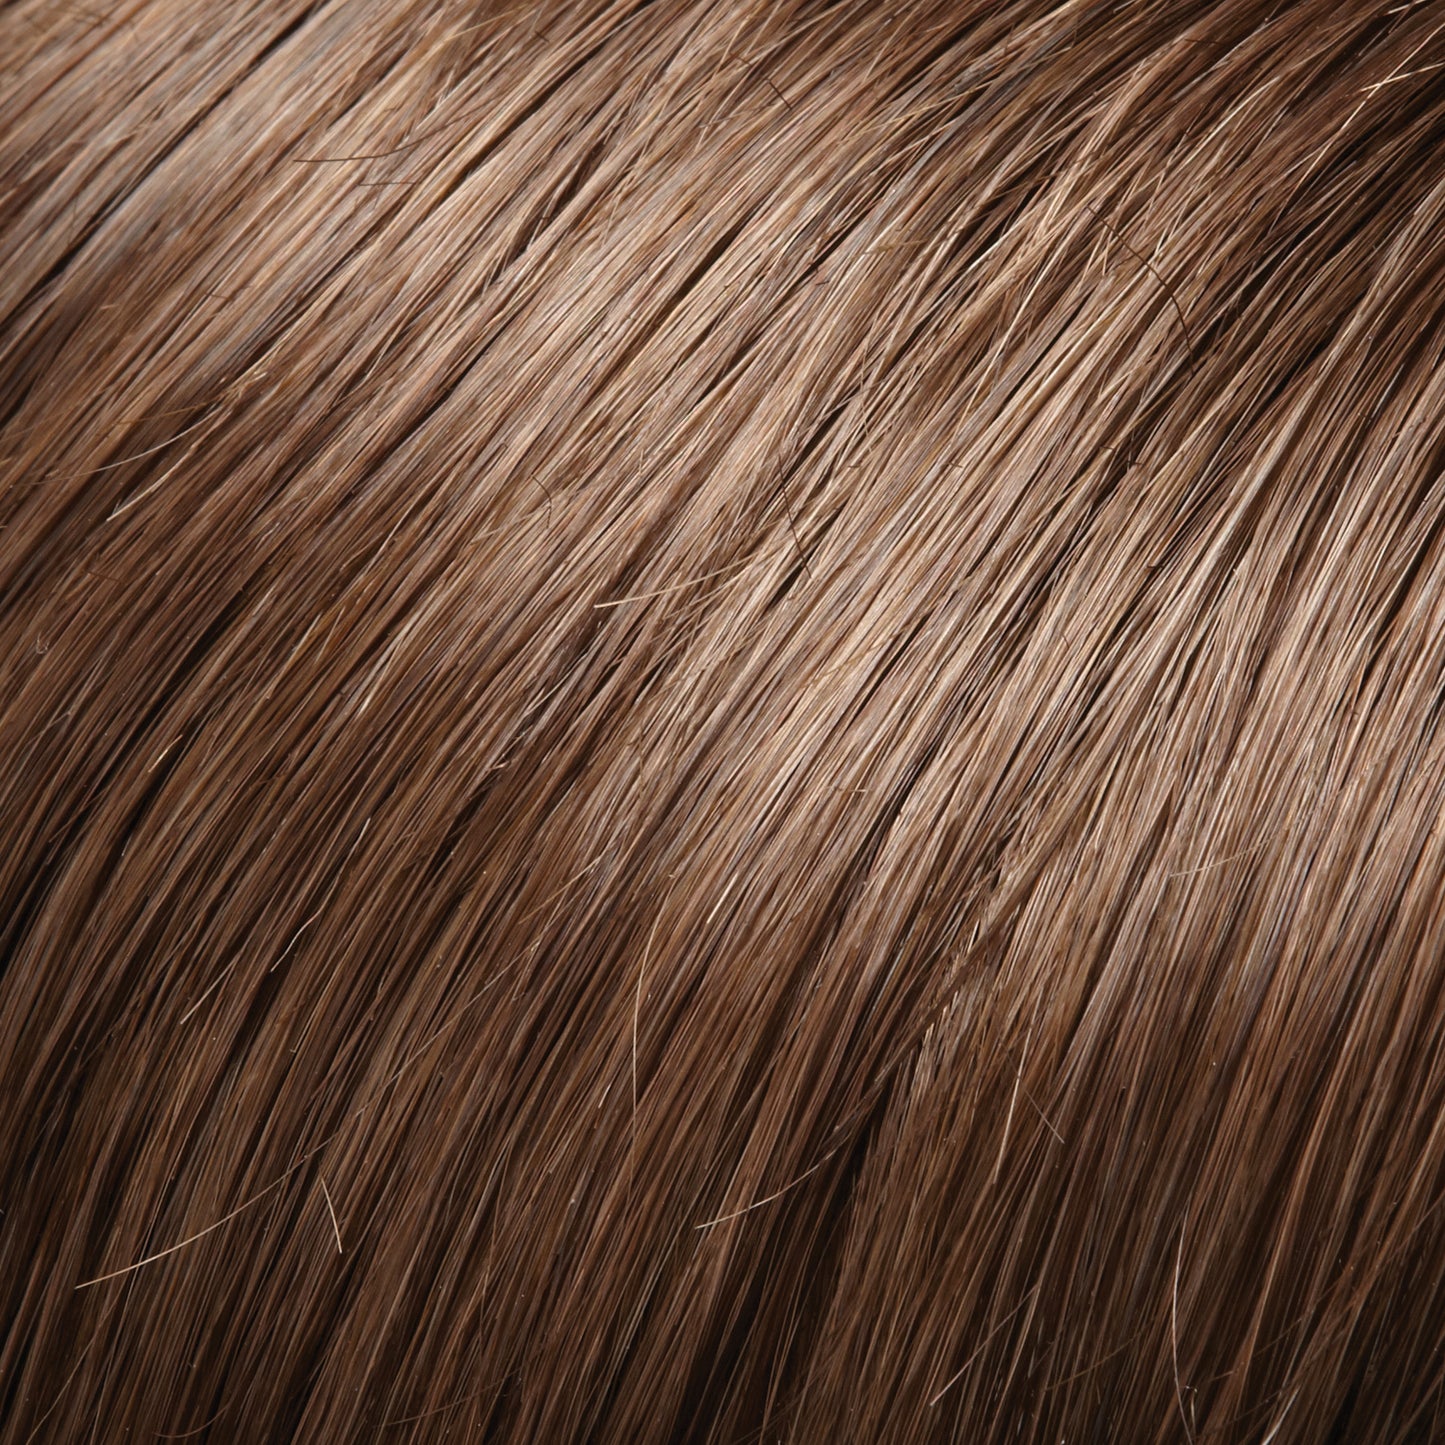 Easicrown Human Hair & RENAU EXCLUSIVE - Jon Renau Toppers